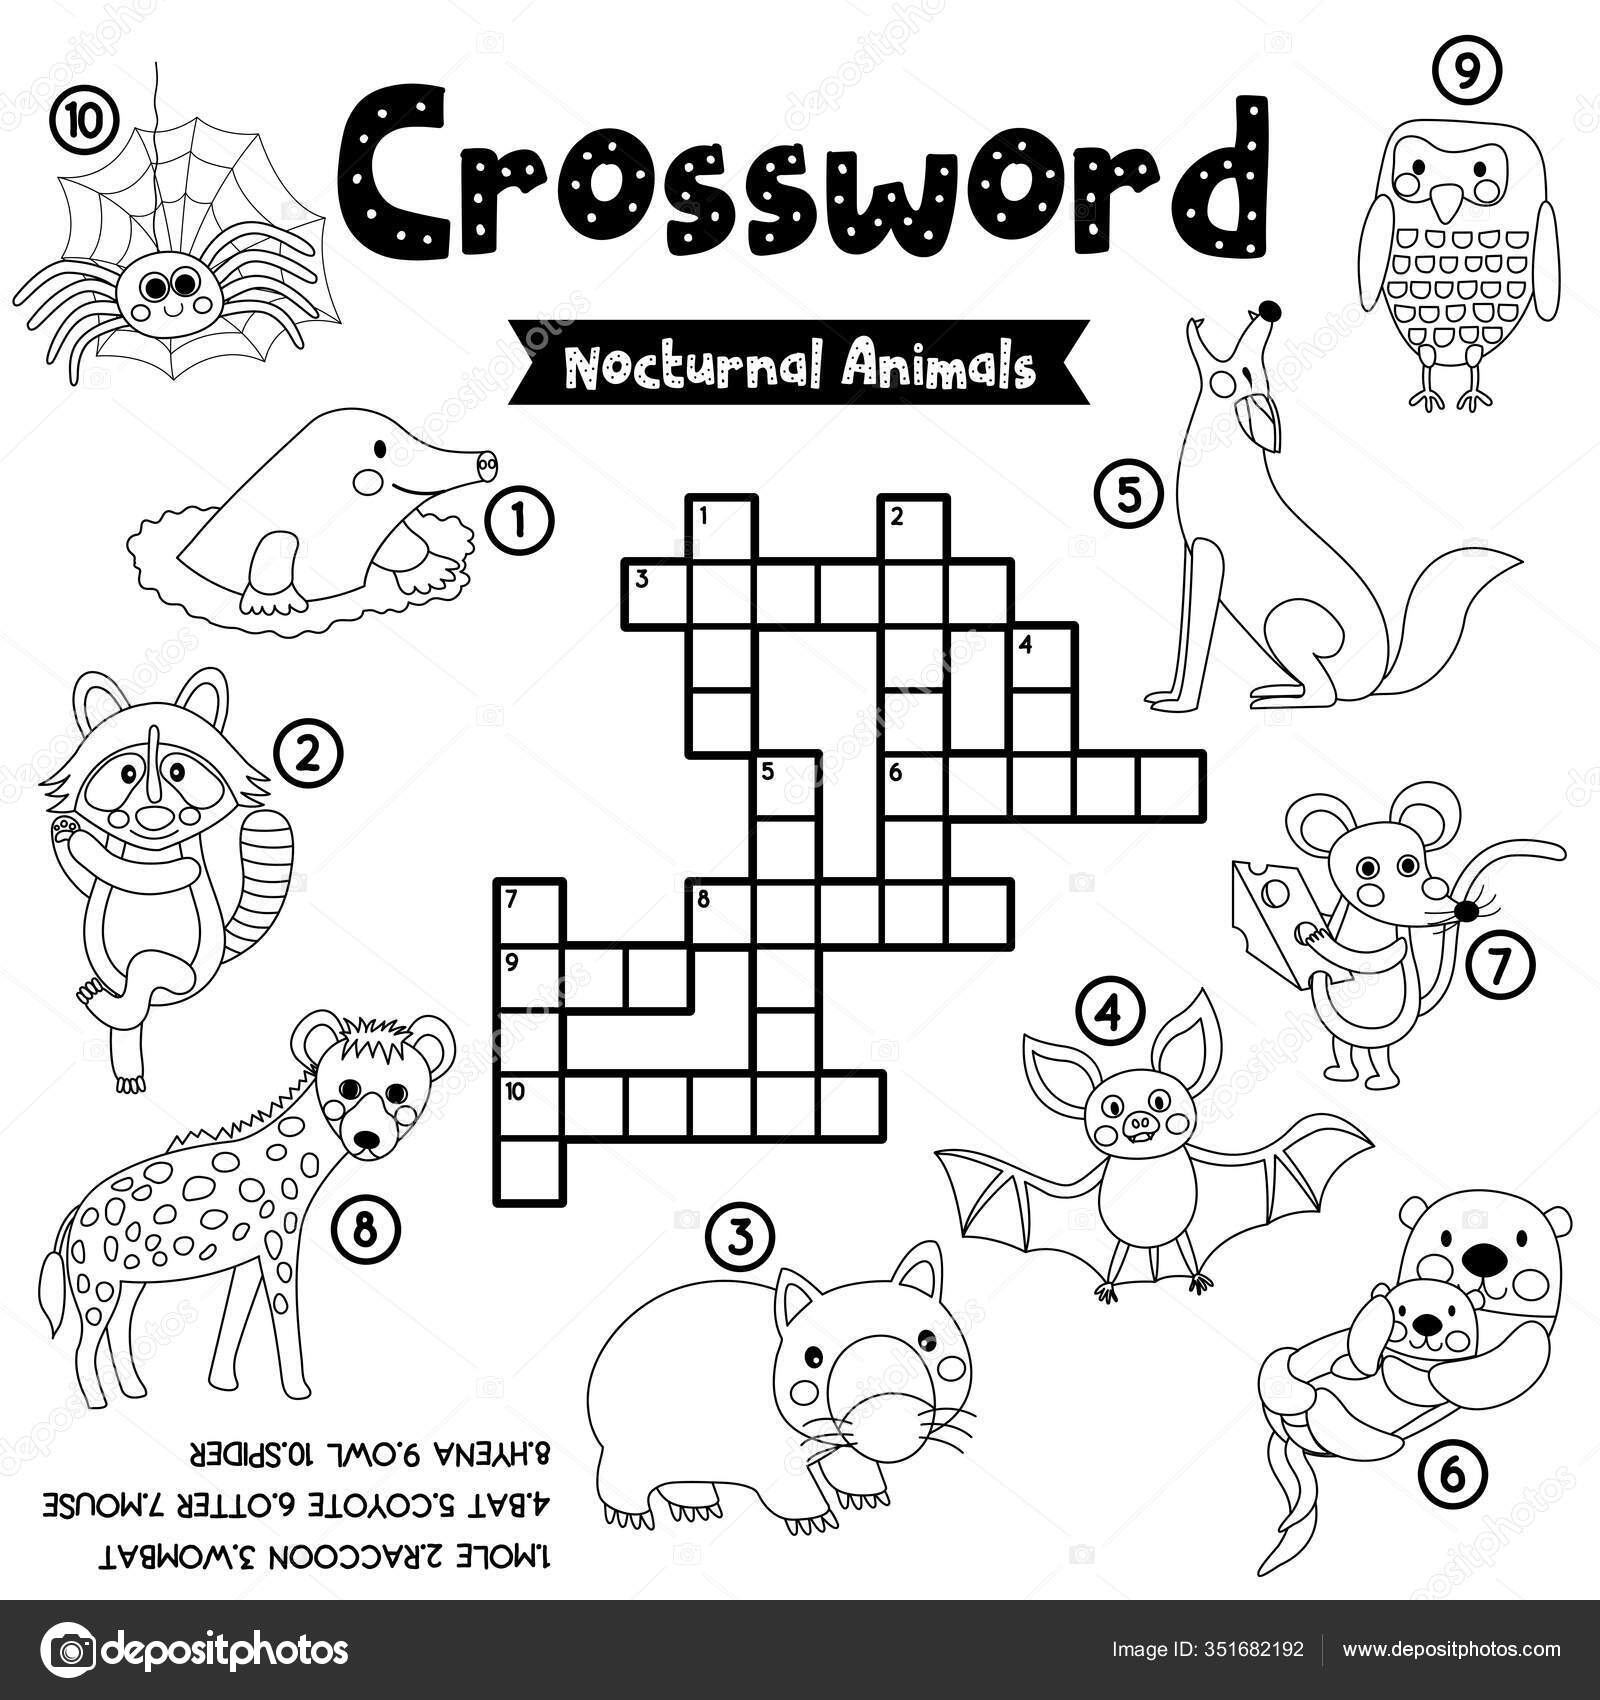 Crosswords Puzzle Game Nocturnal Animals Preschool Kids Activity Worksheet Coloring Stock Vector By natchapohn 351682192